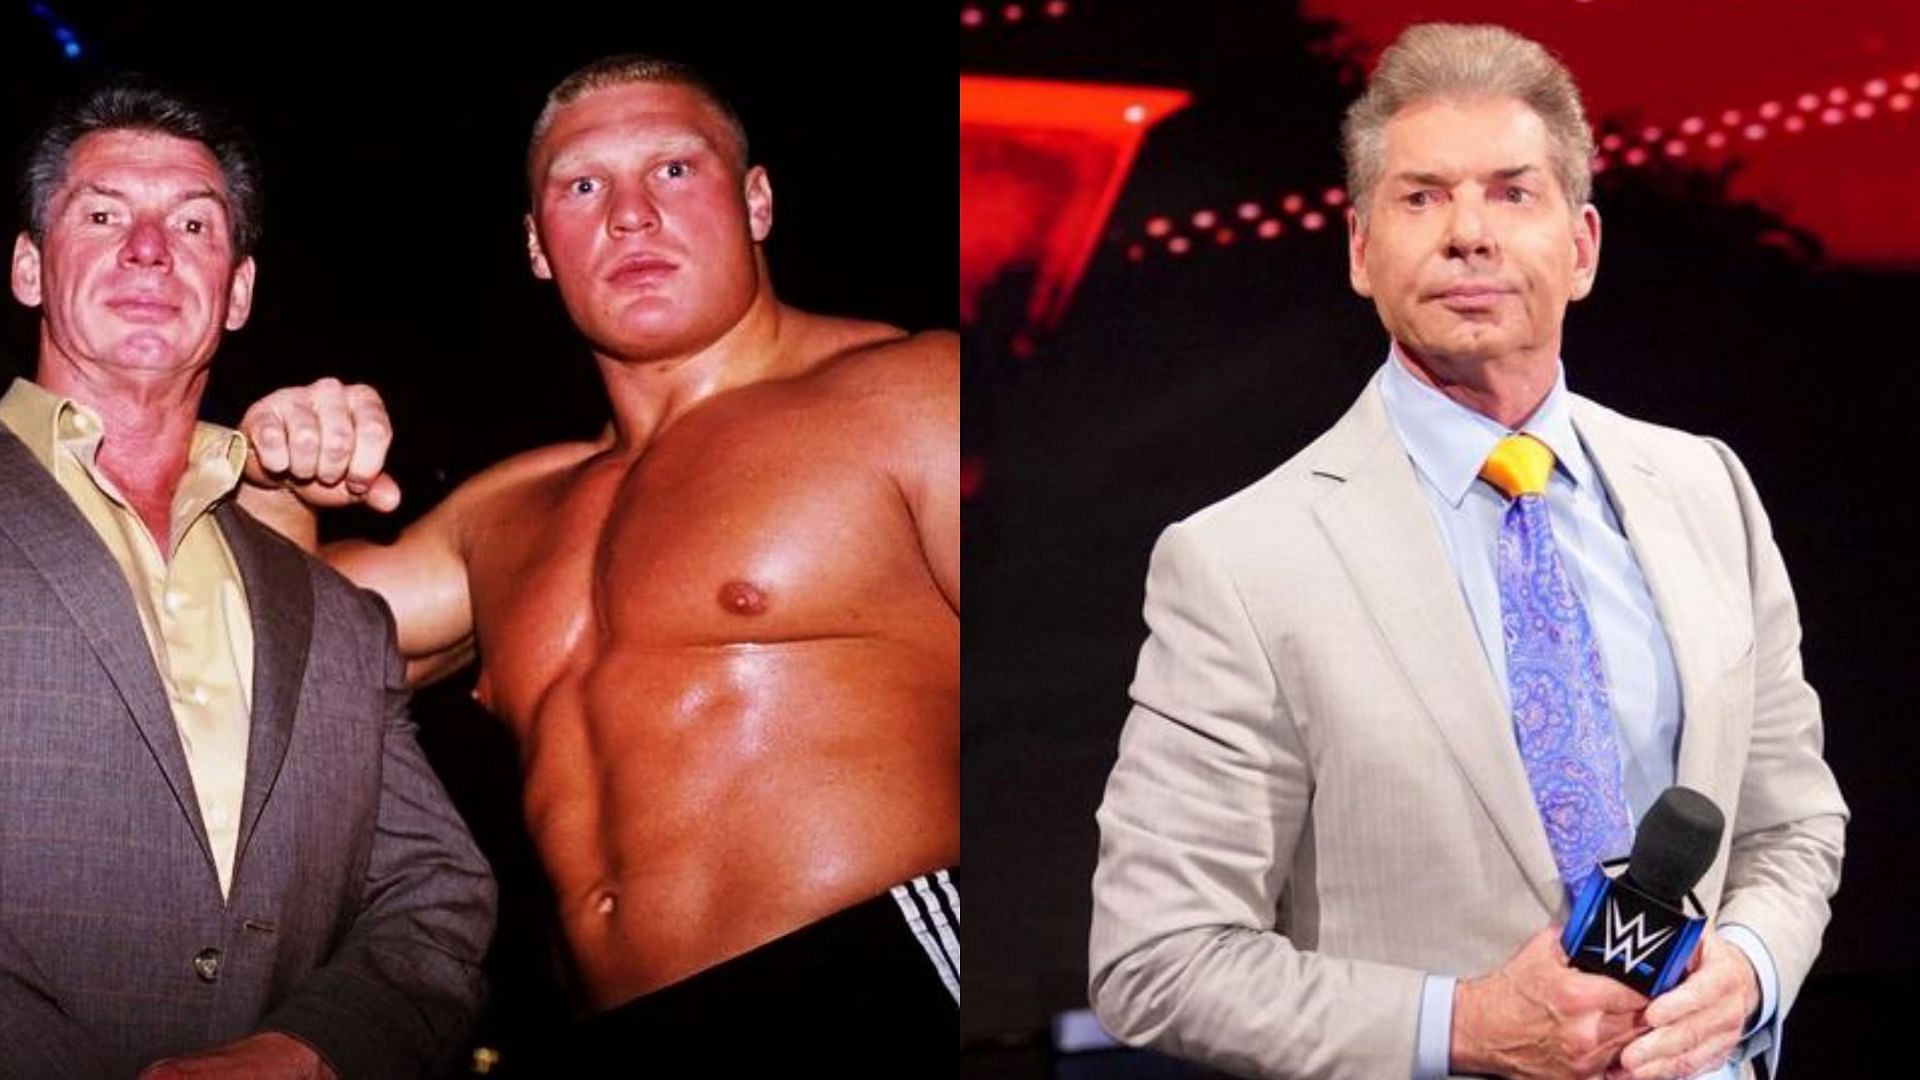 Vince McMahon with former Universal Champion Brock Lesnar